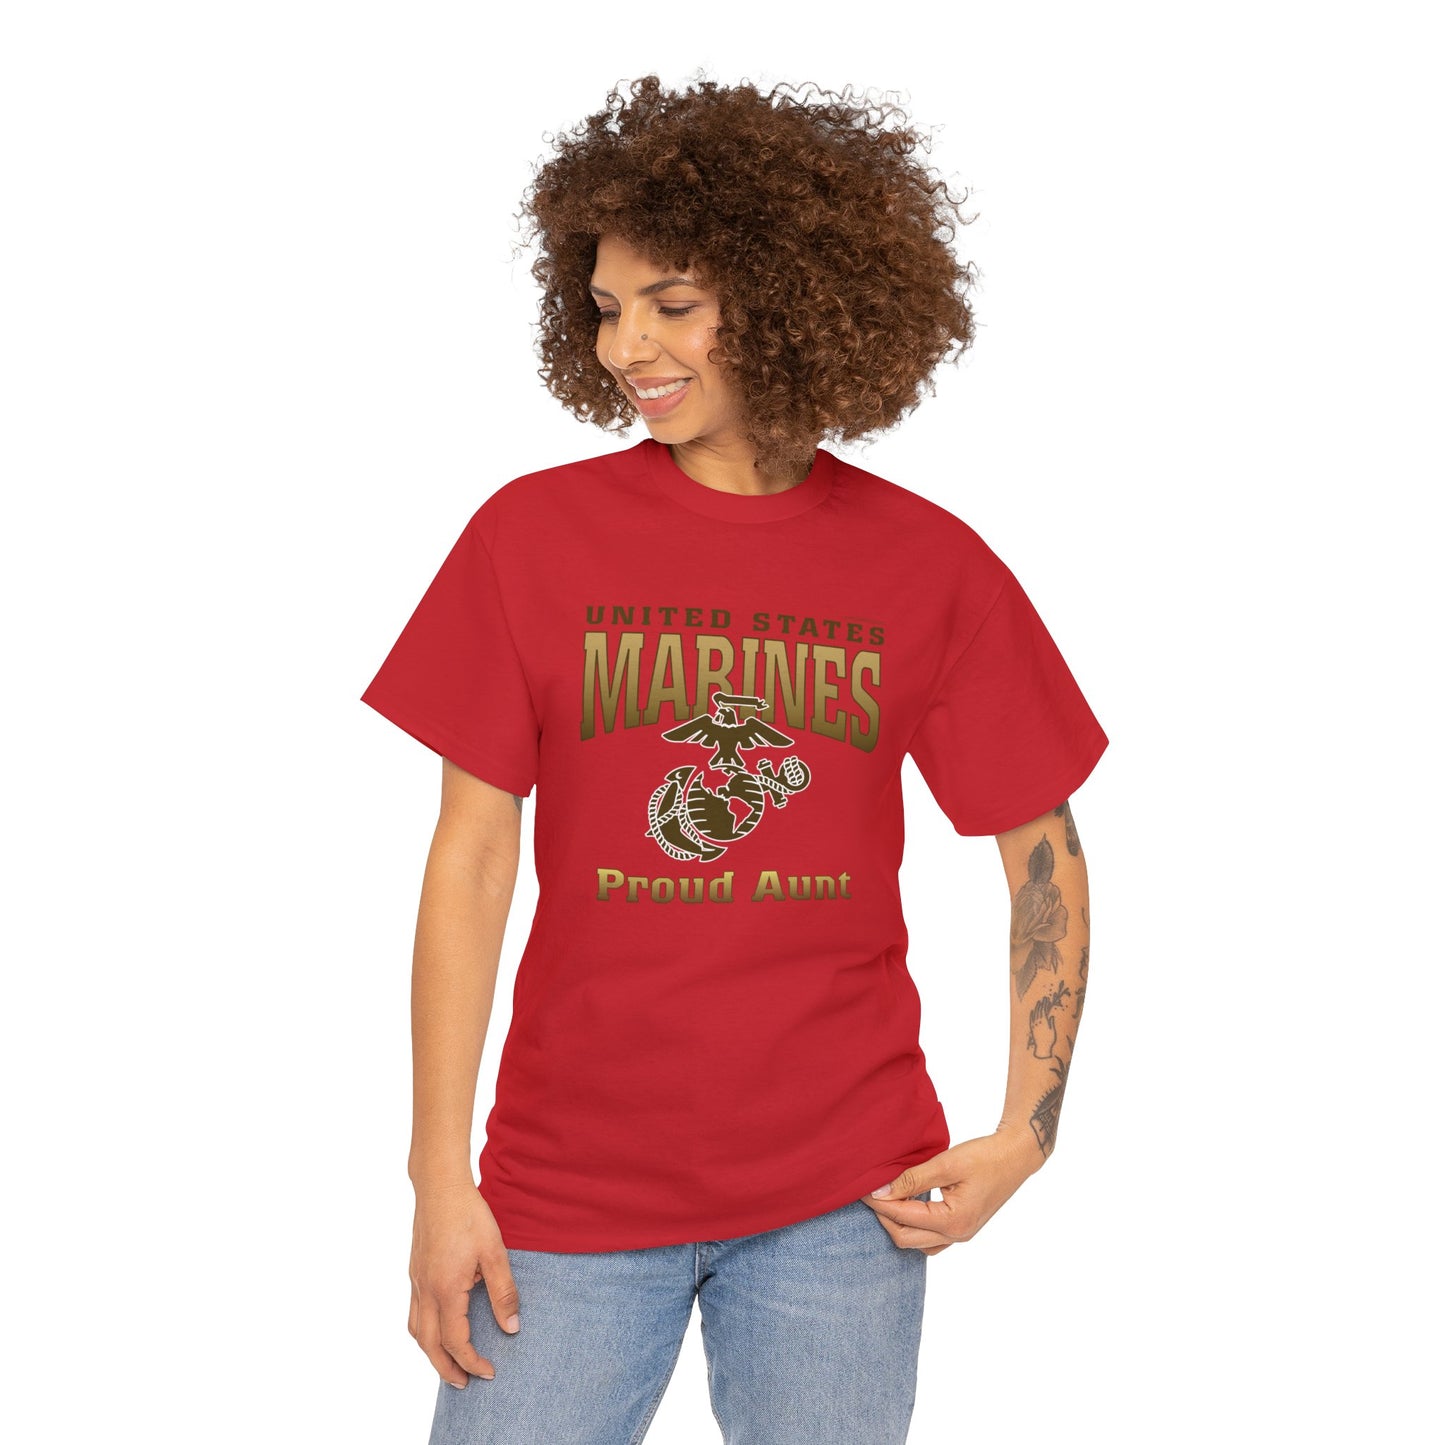 T-Shirt: United States Marines Proud Aunt